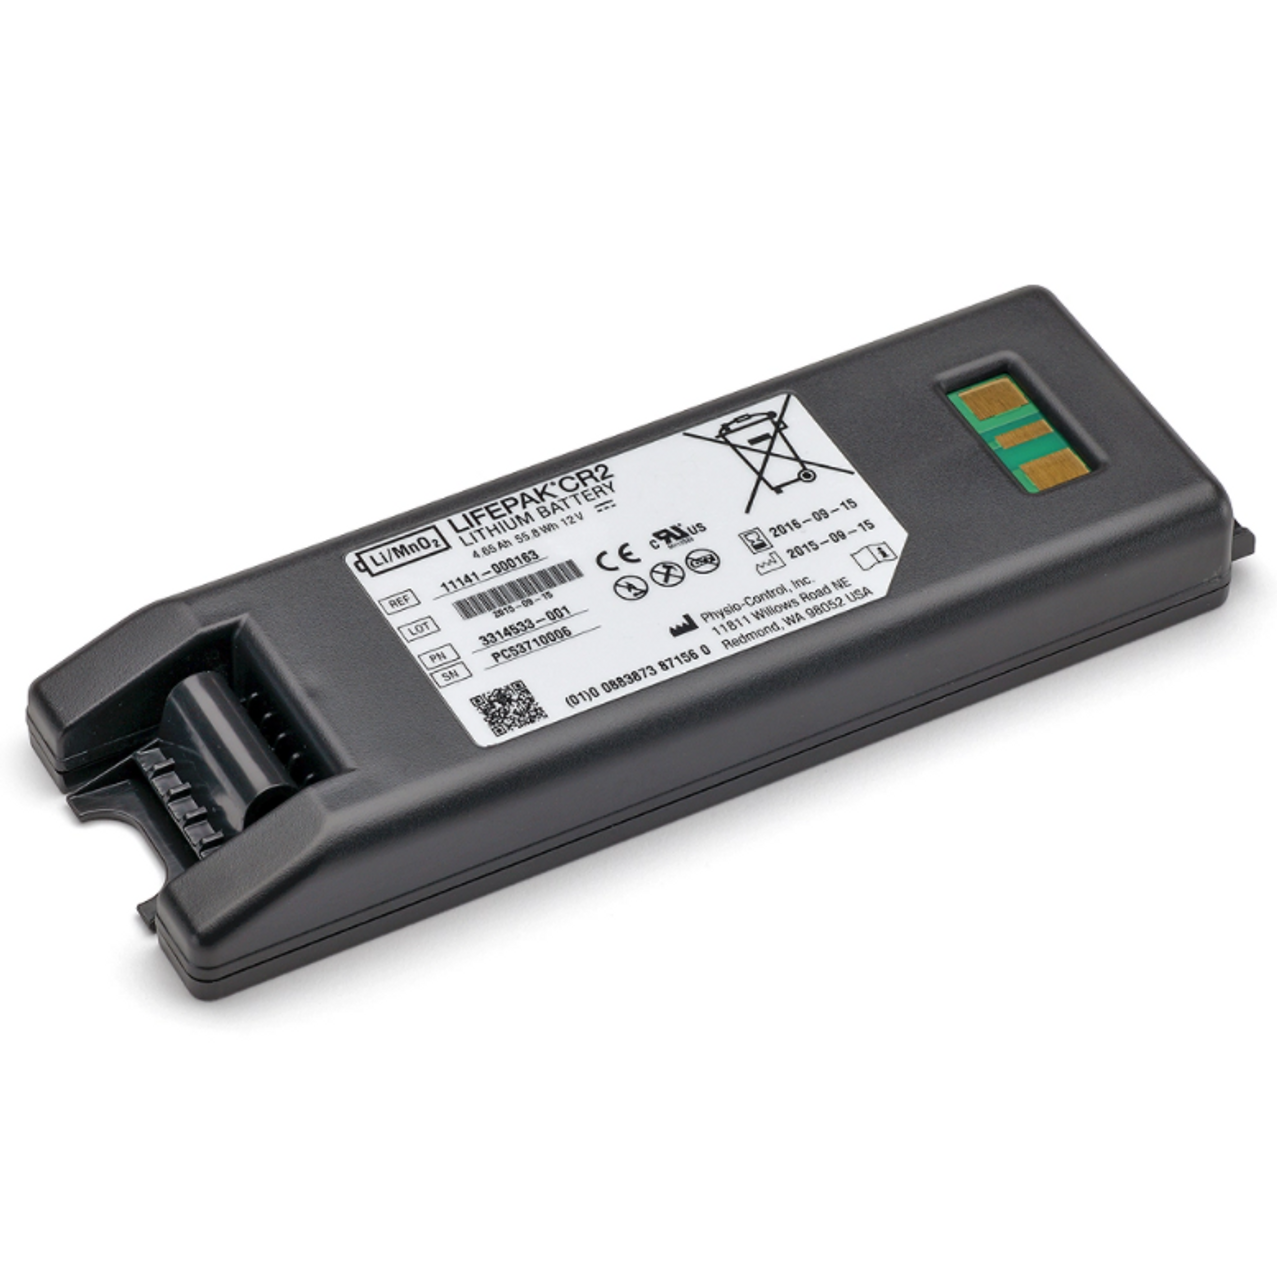 Physio LifePak CR2 AED Battery